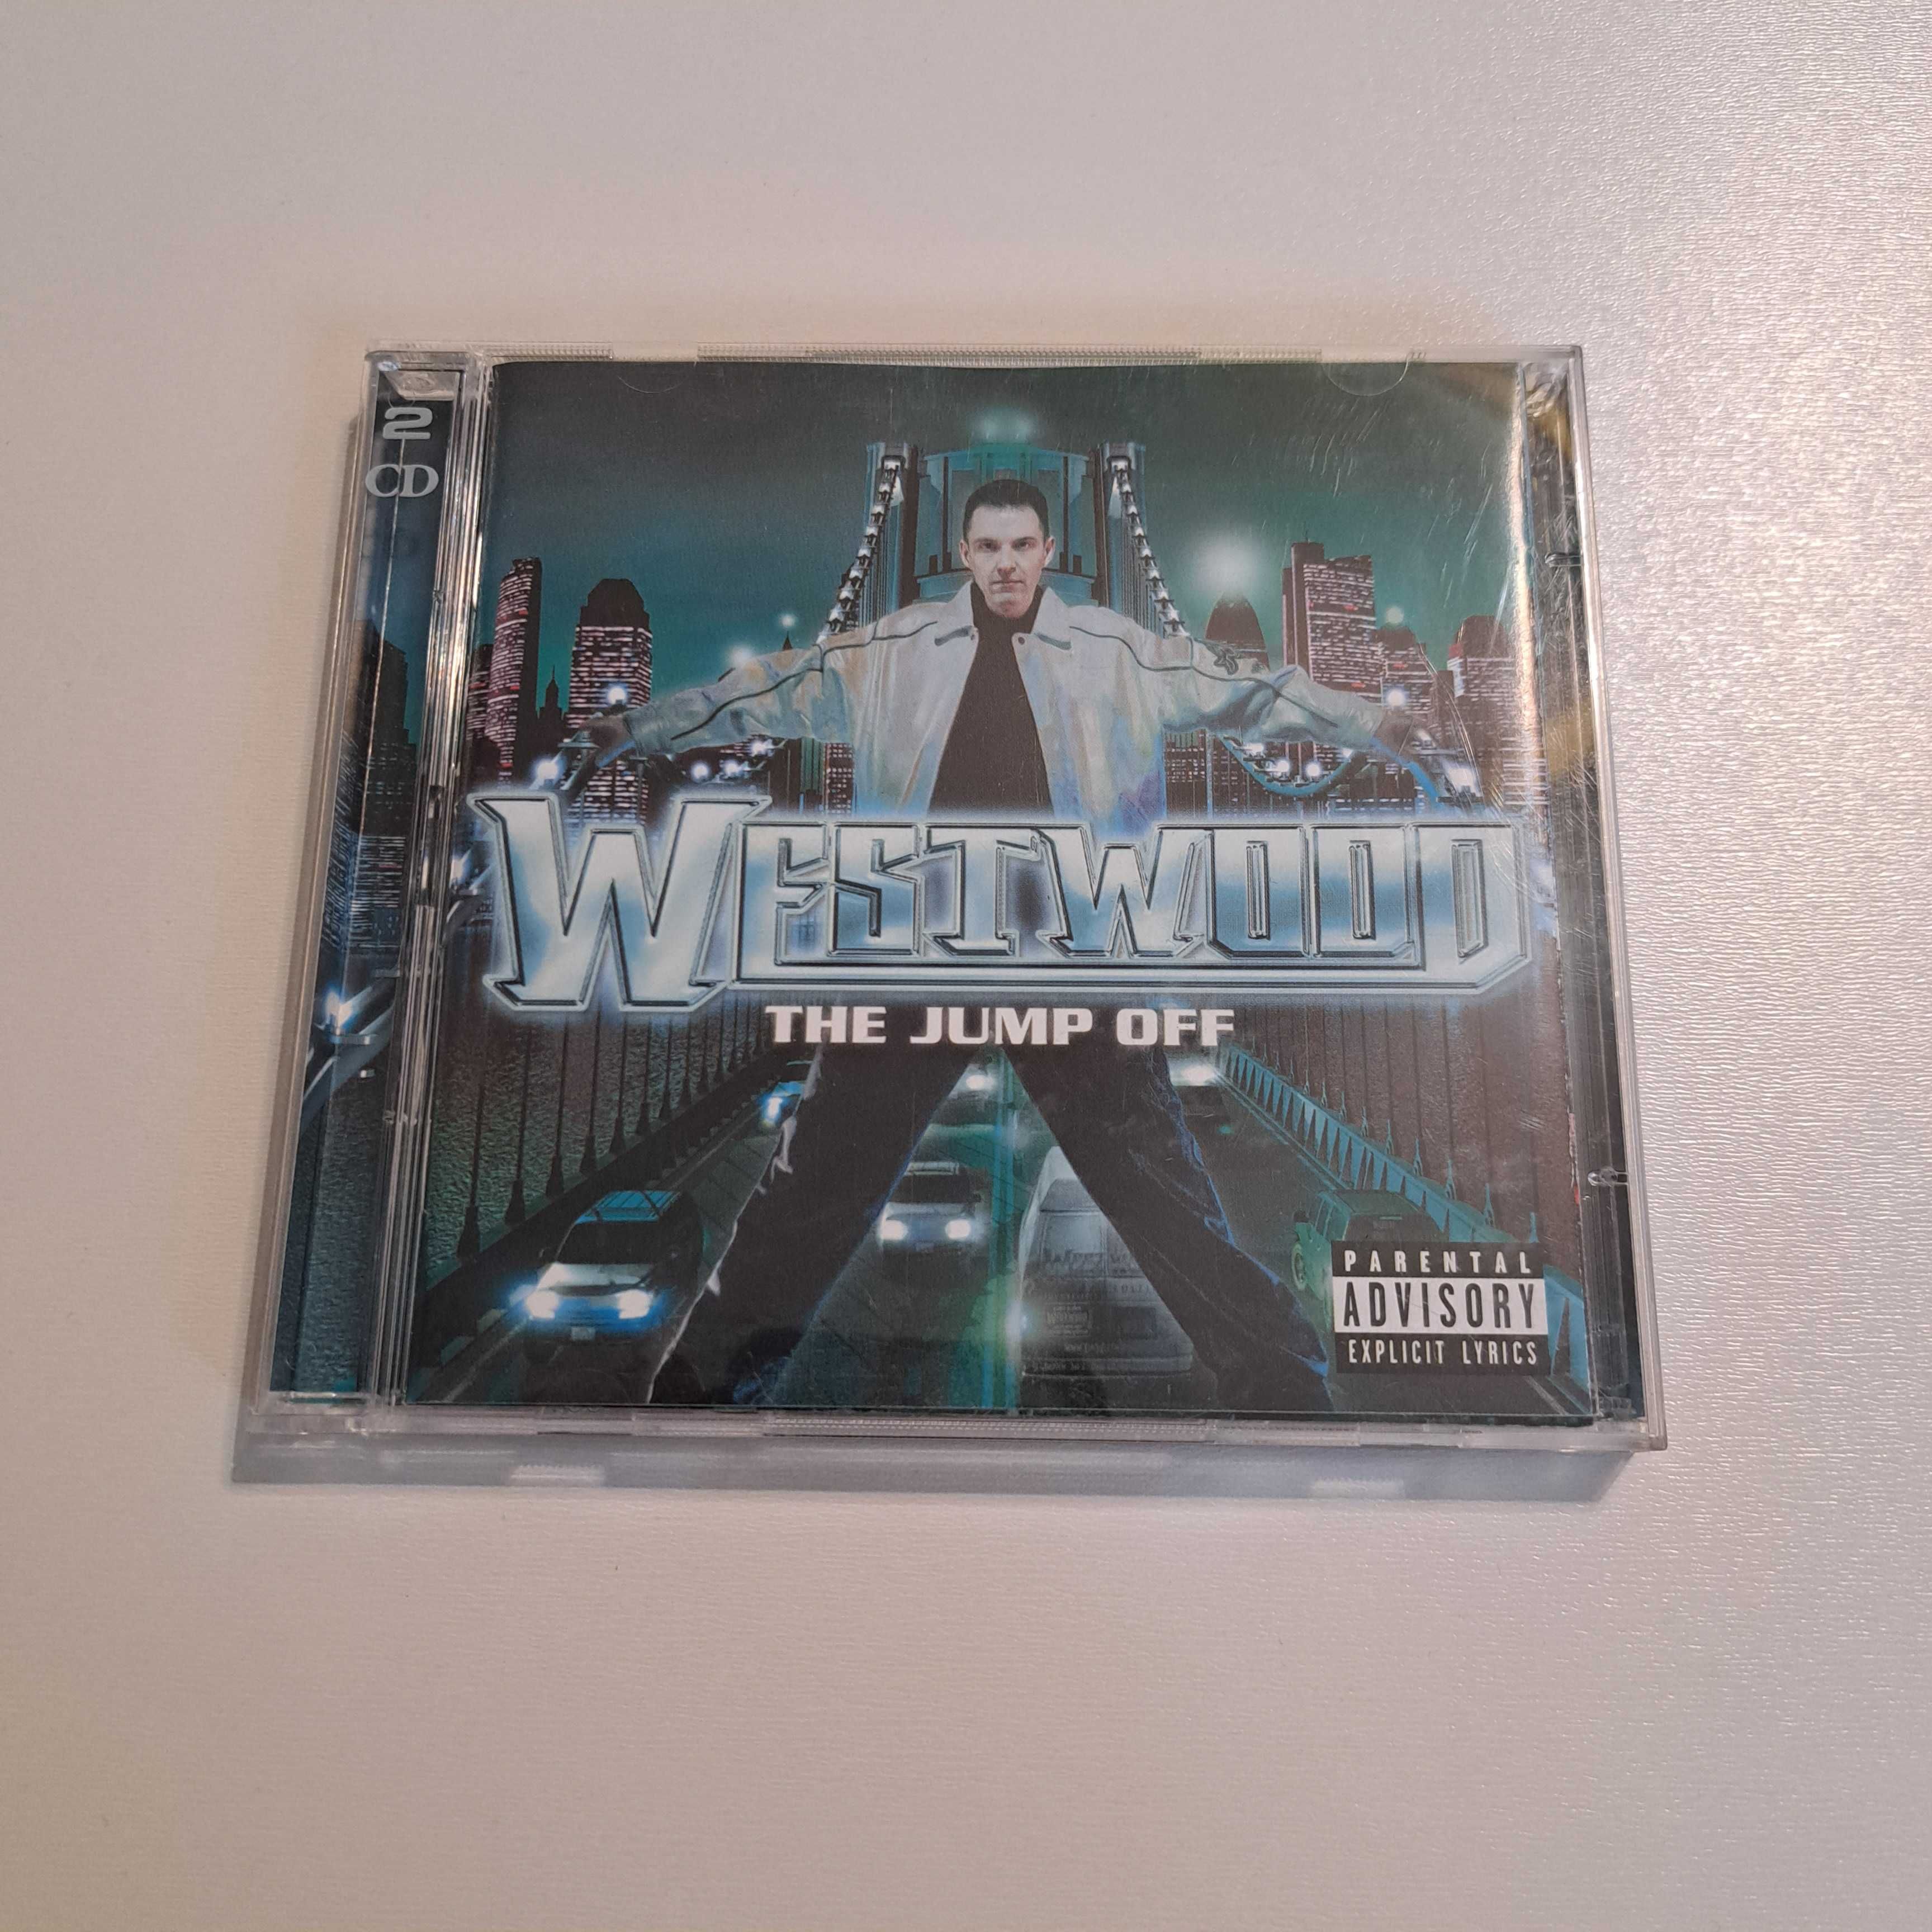 Płyta CD  Westwood - The Jump Off  2CD  nr428